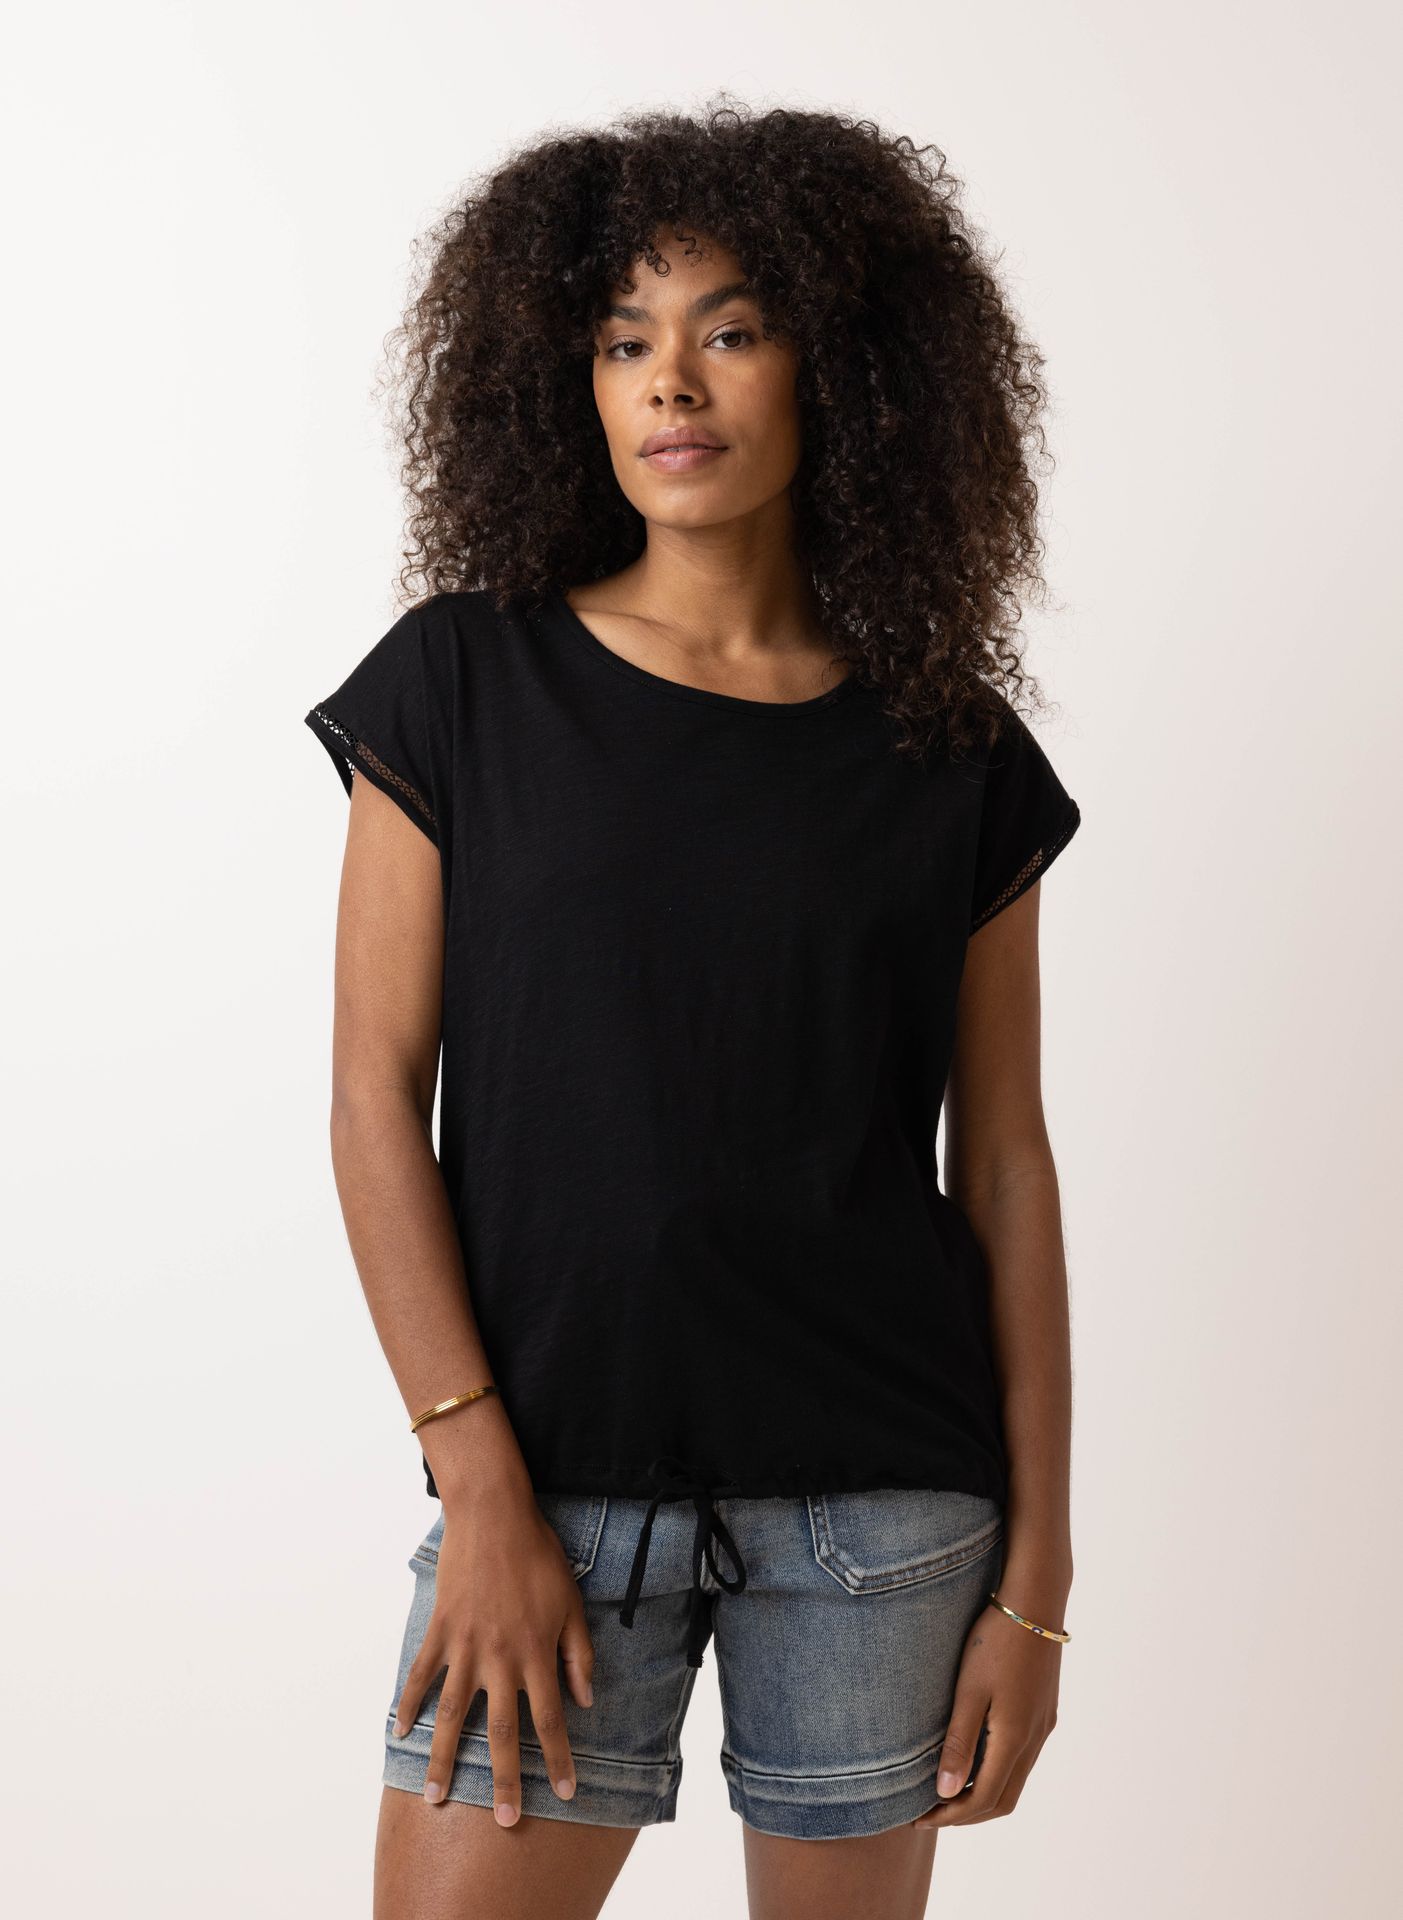 Norah Zwart shirt black 209485-001